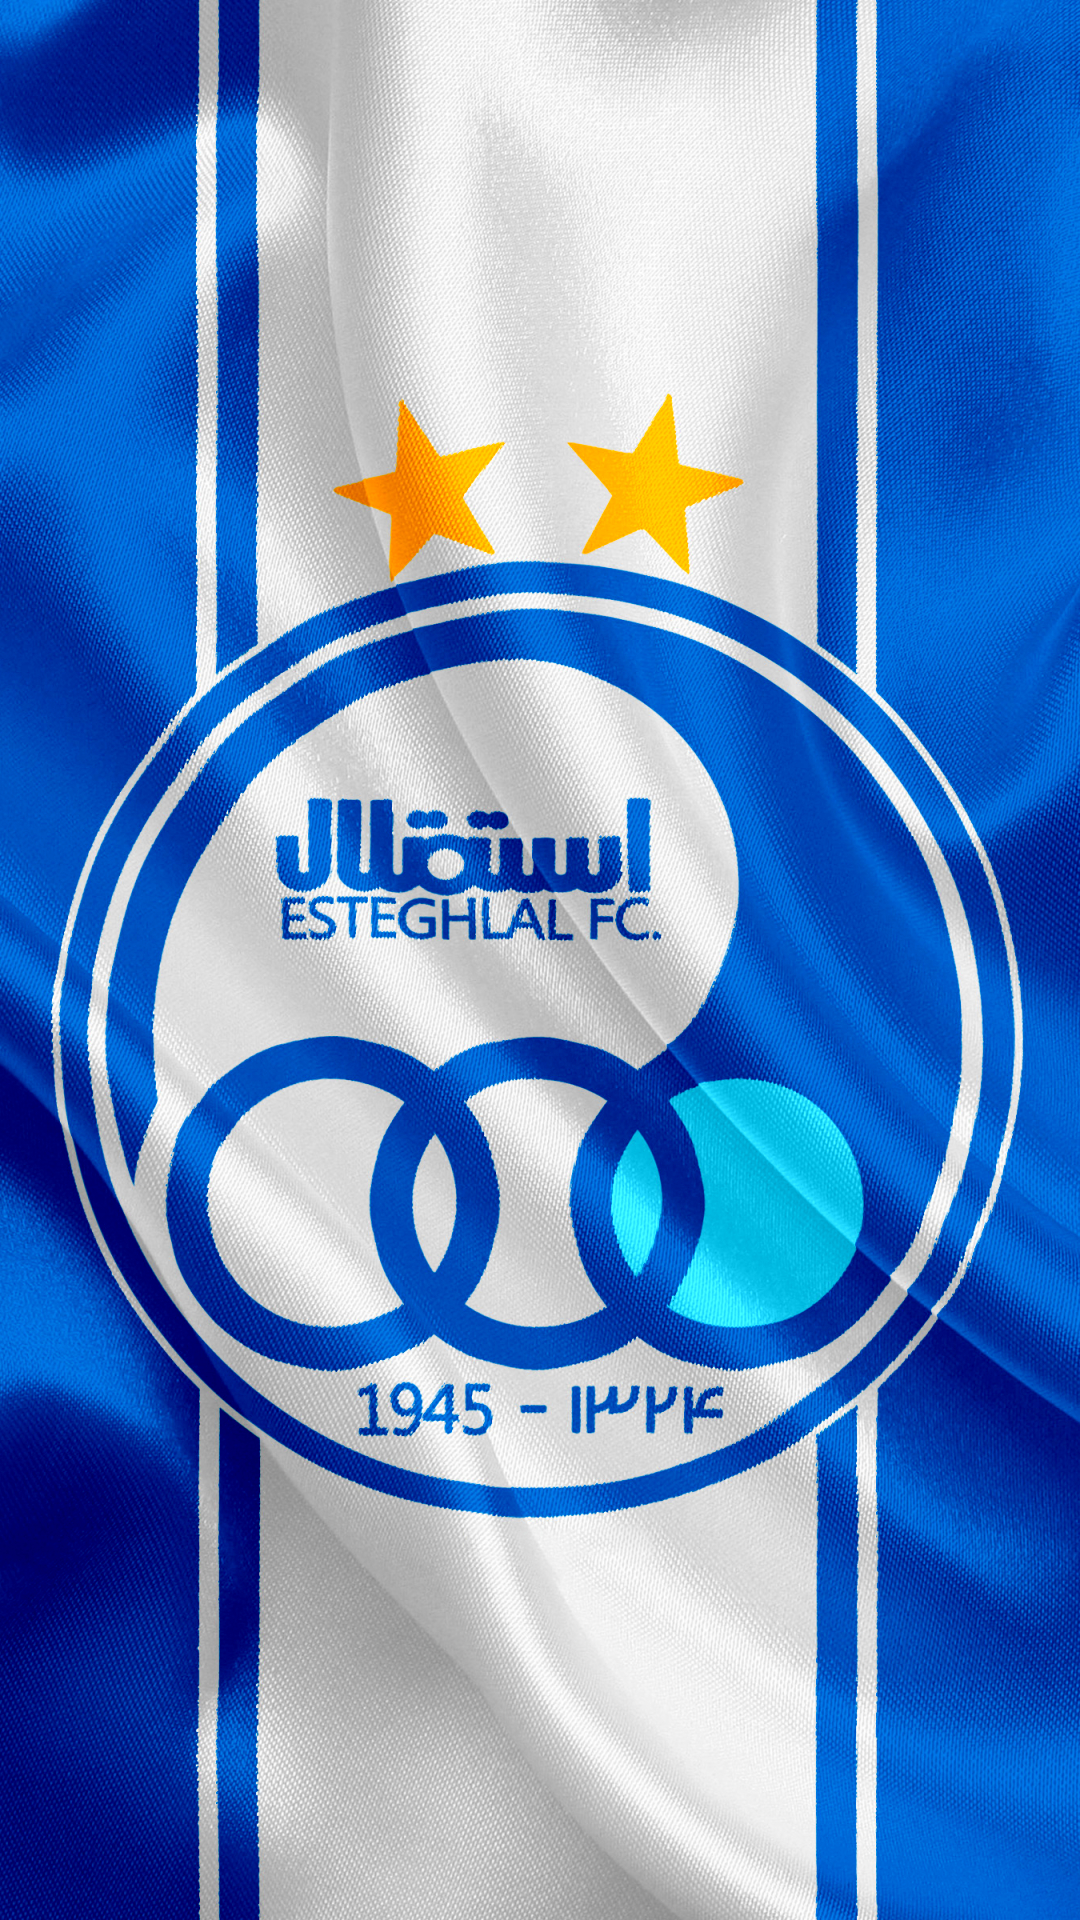 esteghlal f c, sports, emblem, soccer, logo